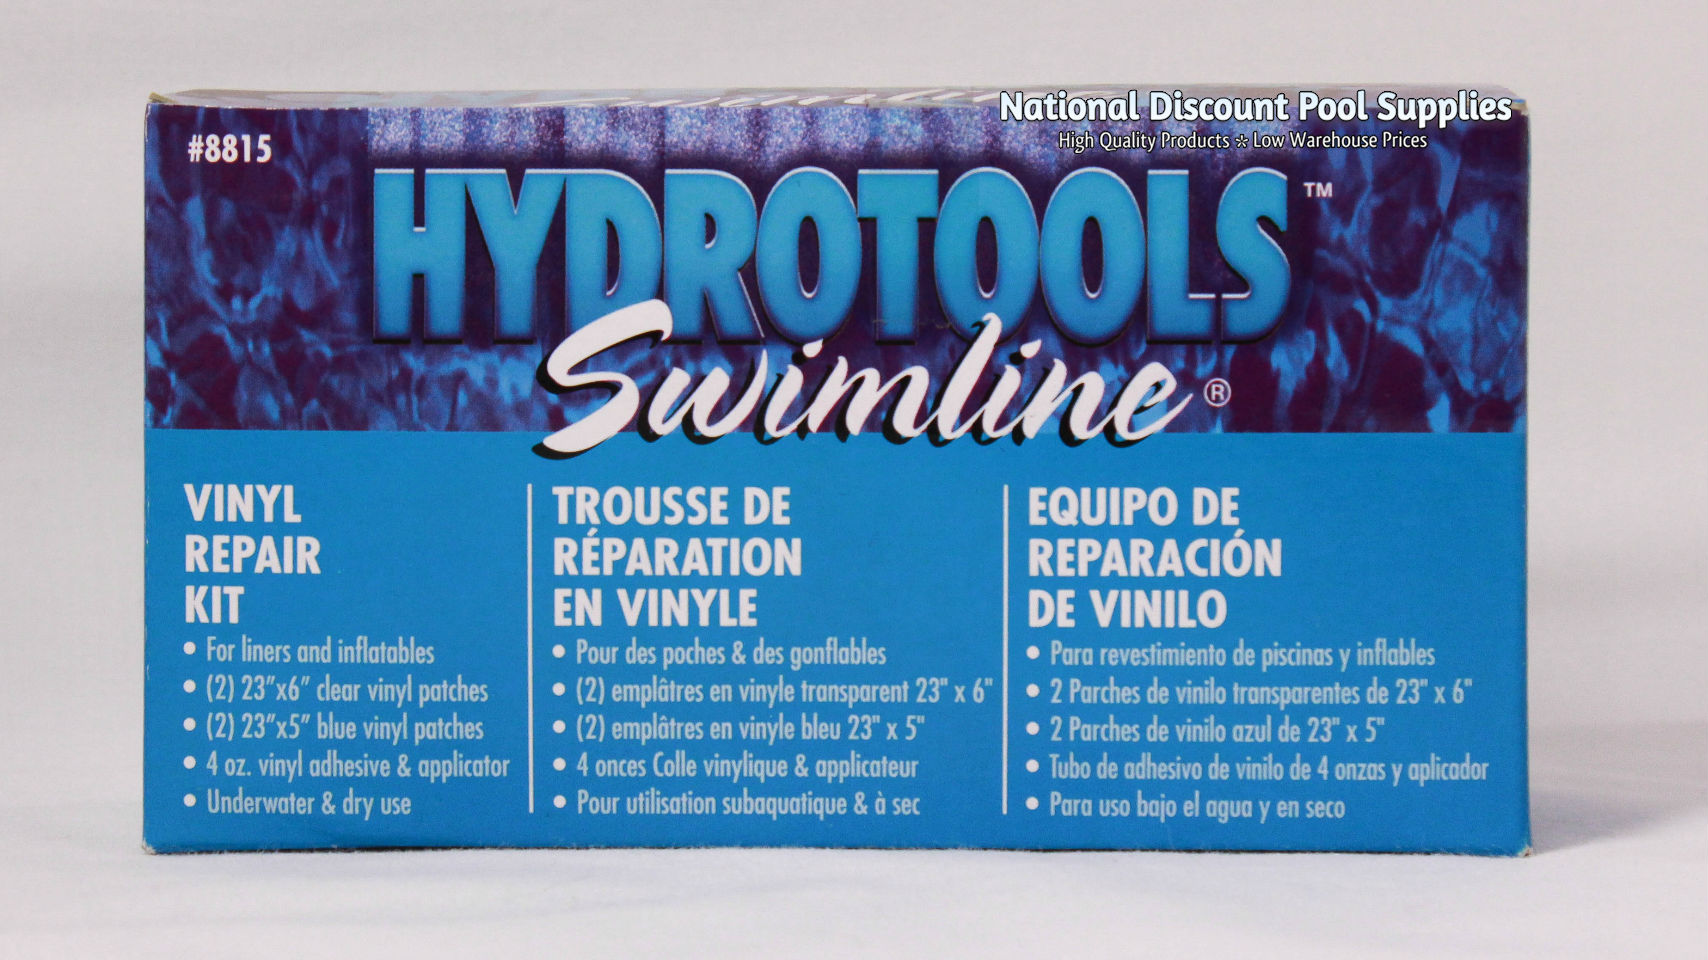 4oz "wet" Vinyl Liner Pool Patch Kit by Swimline